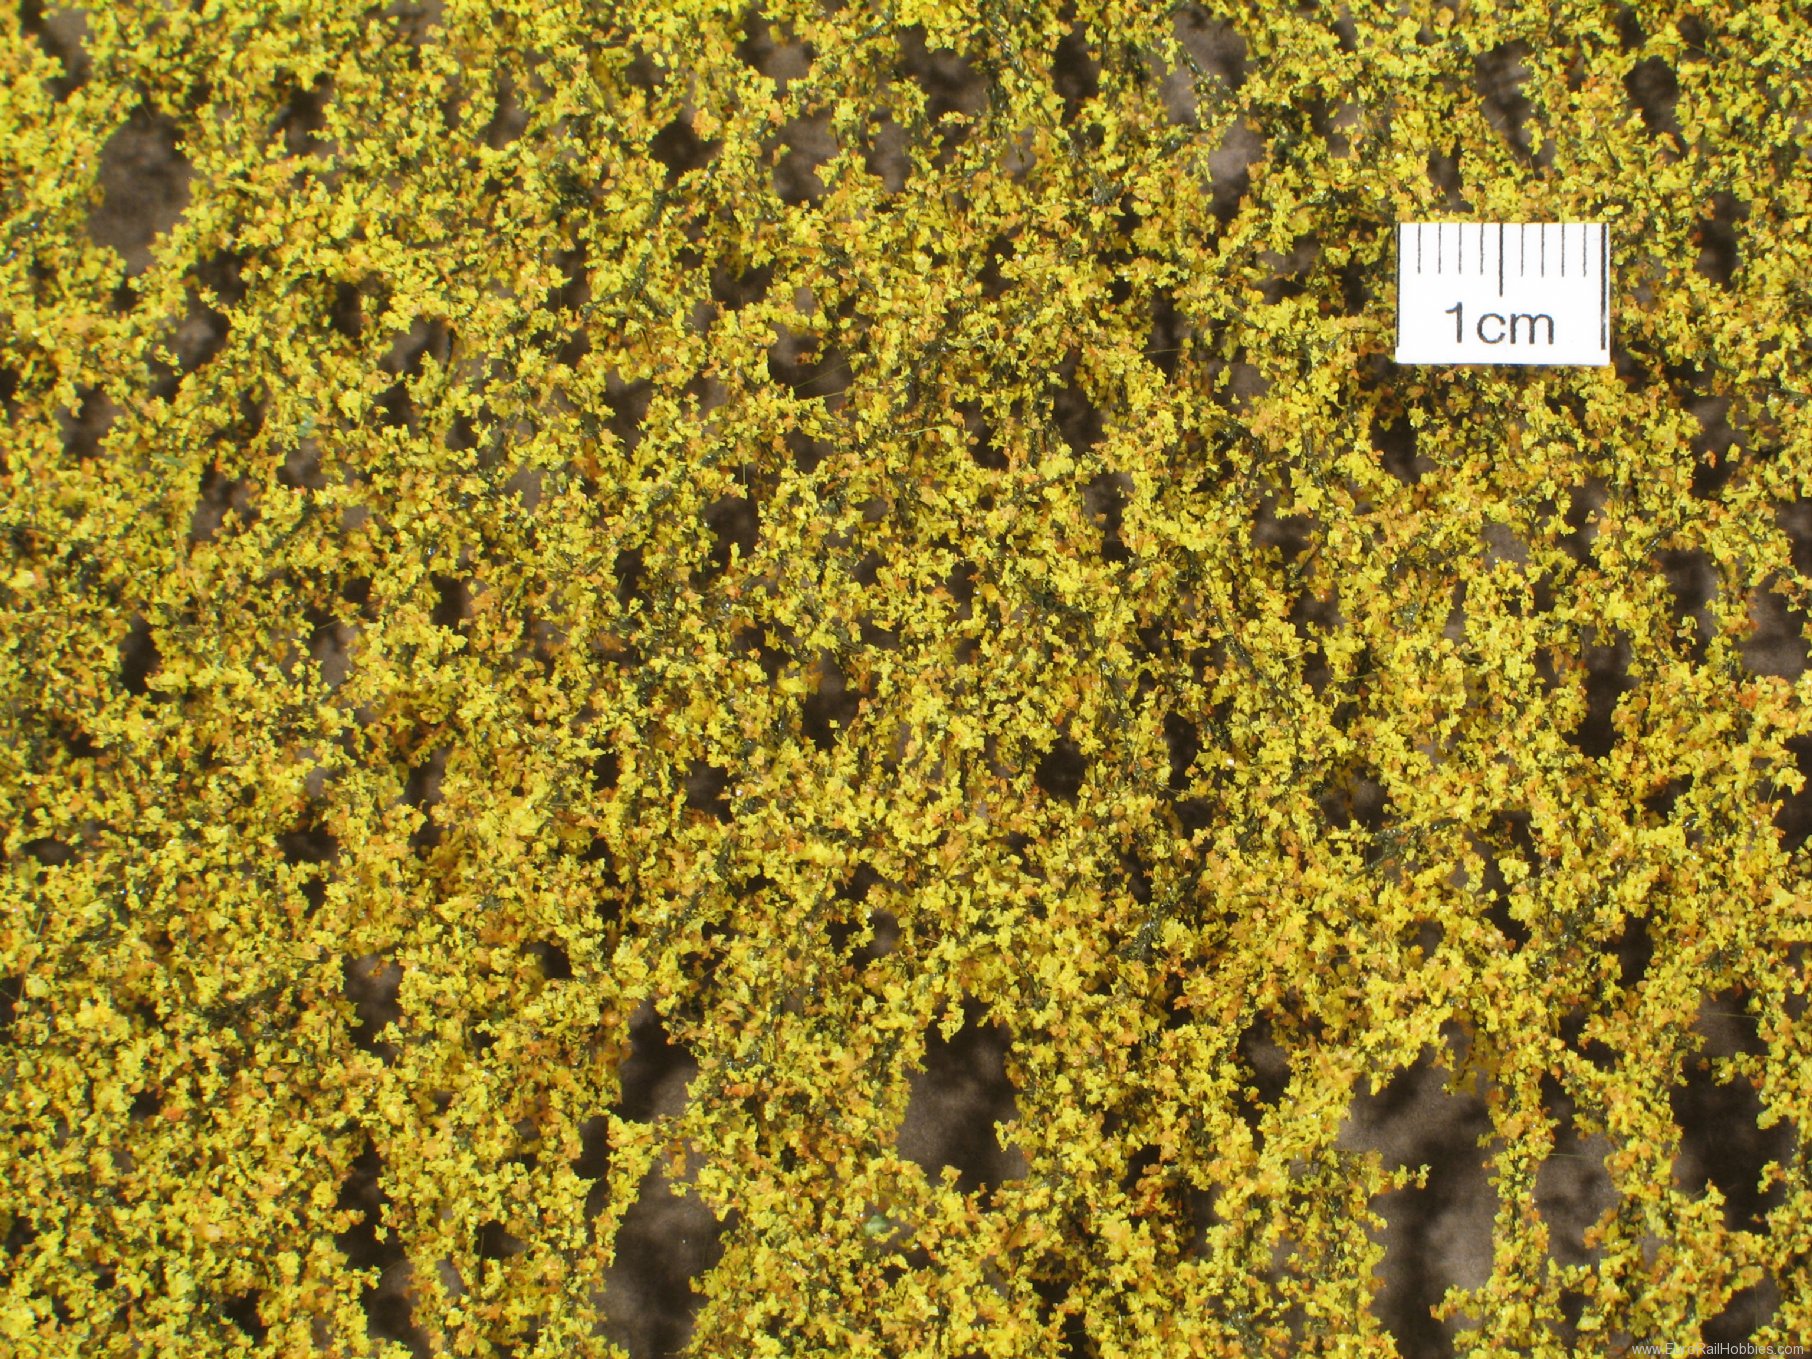 Silhouette Silflor MiniNatur 913-14G Lombardy poplar foliage, Late Fall (63x50 cm)